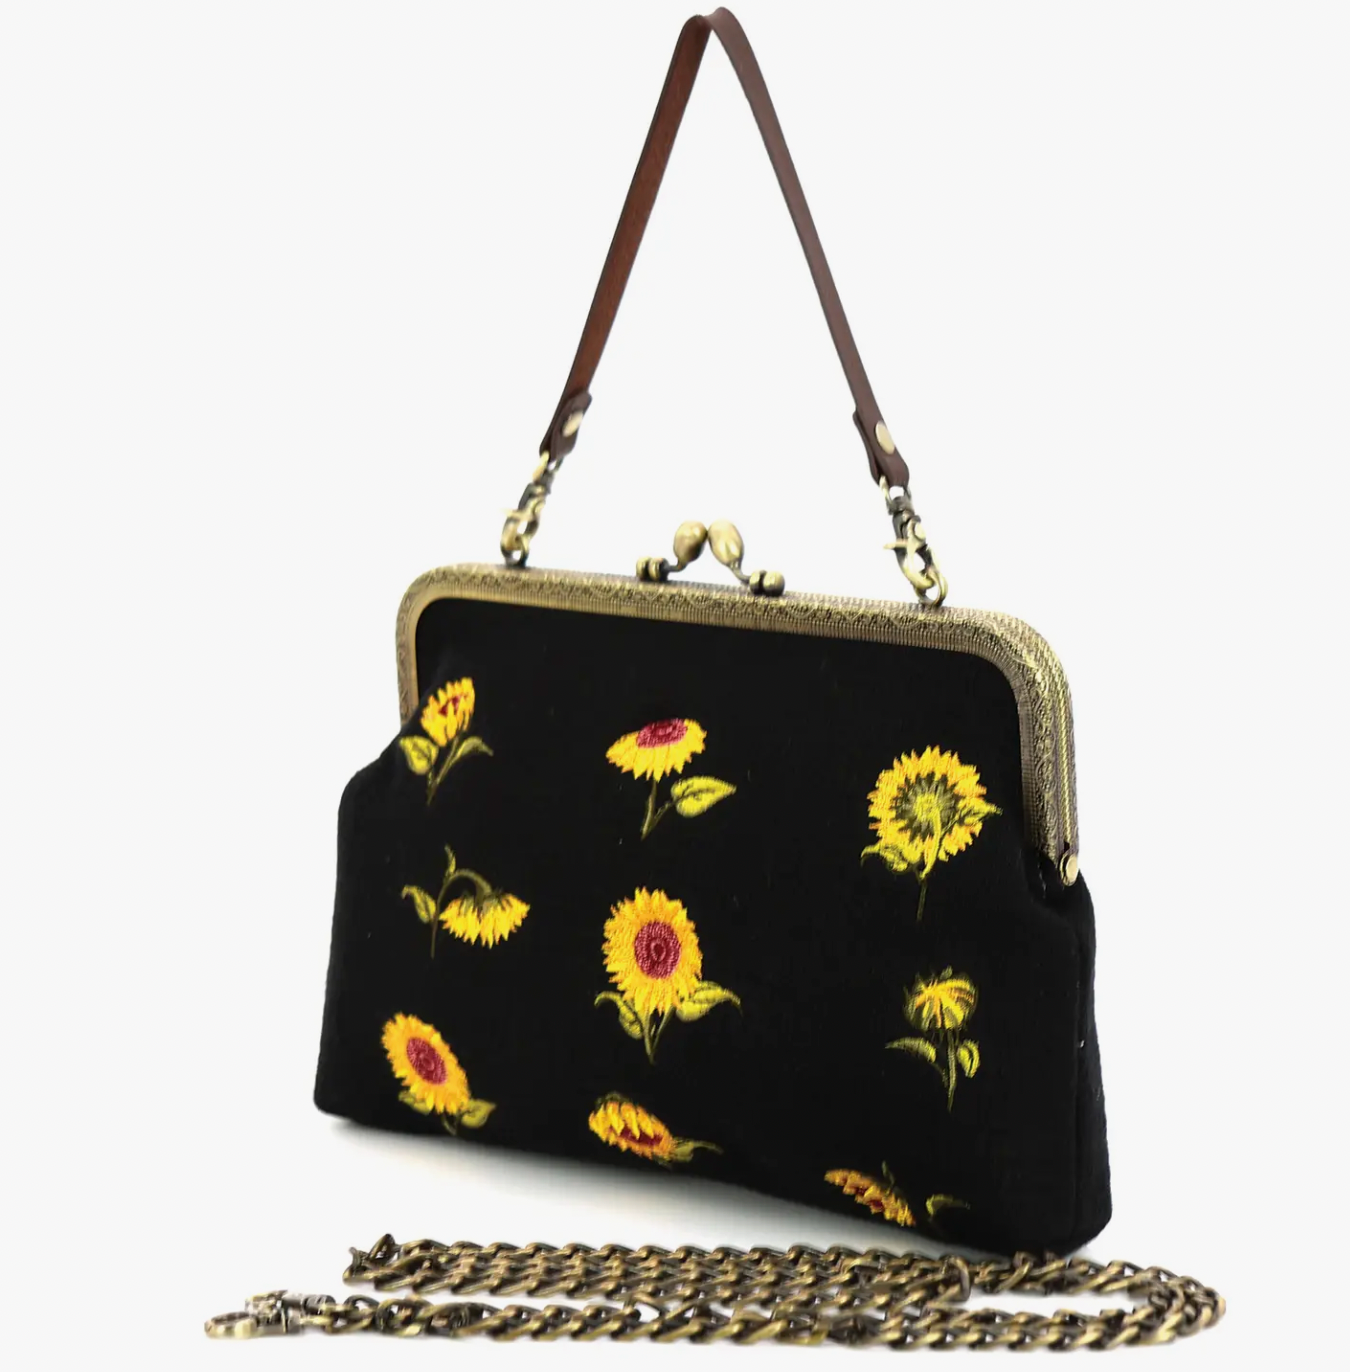 Sunflower Kiss-Lock Bag in Cotton Blend